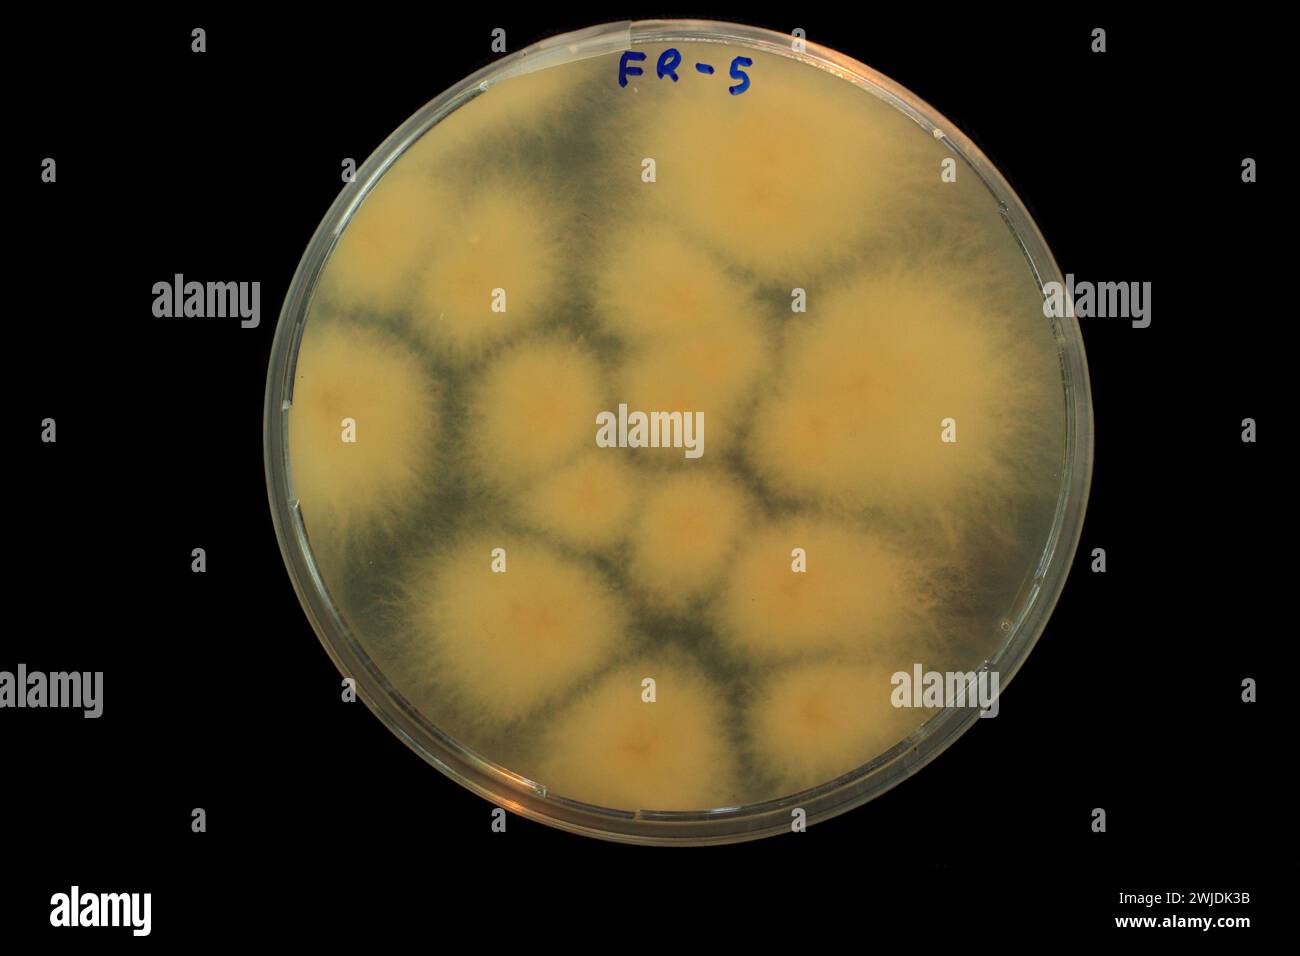 Colonies of deadly Fusarium oxysporum sp. cubense tropical race 4 fungus growing in Petri dish  Stock Photo